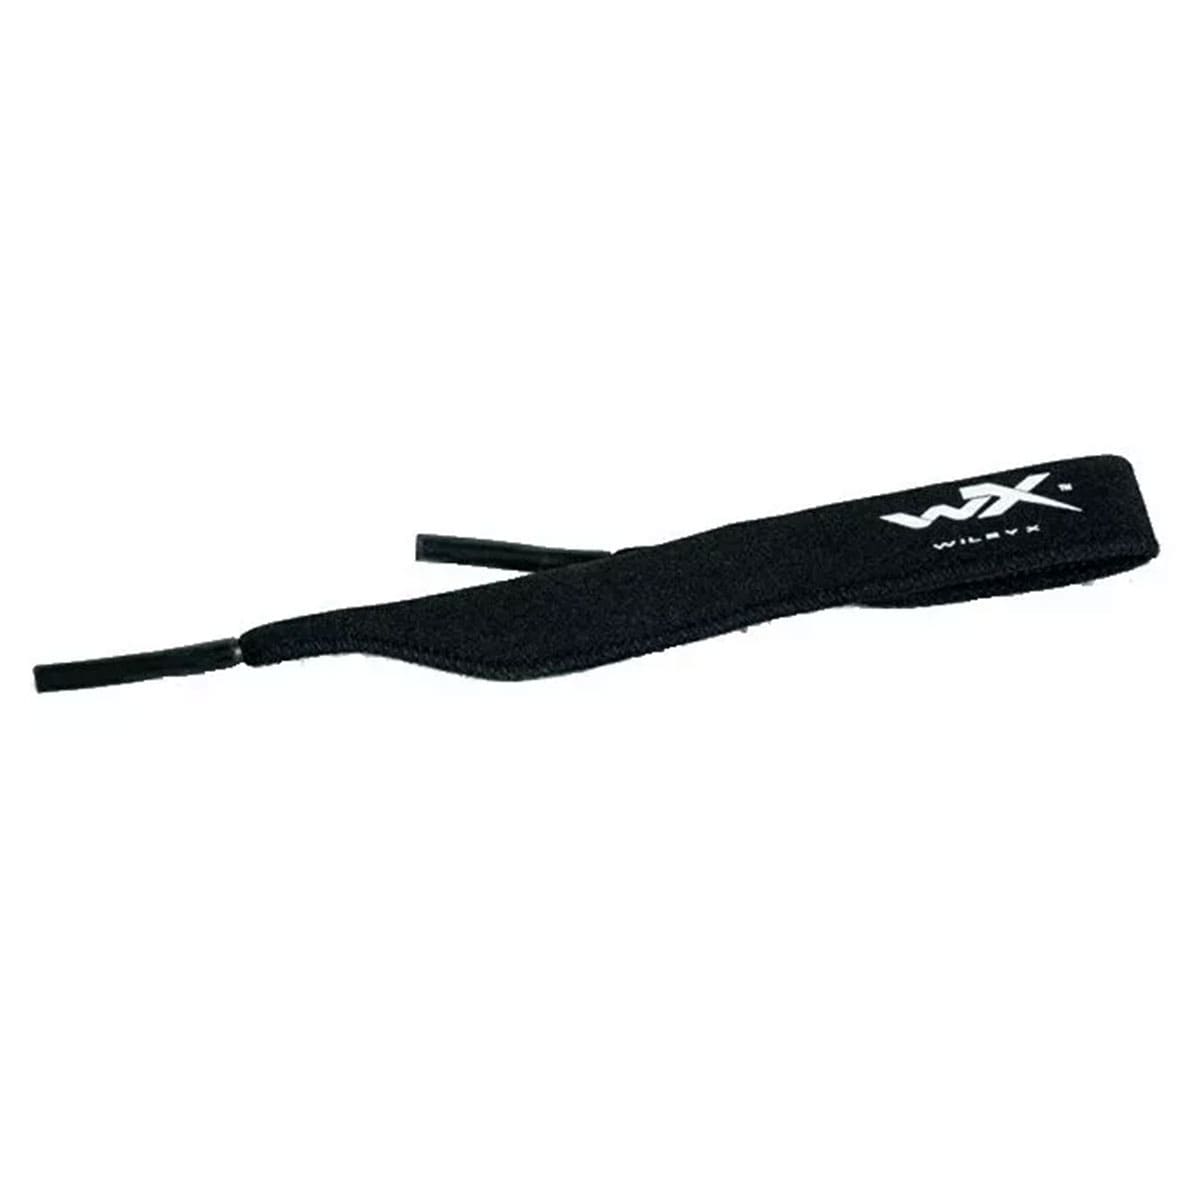 Ремінець для окулярів Wiley X Floating Leash Cord - Black